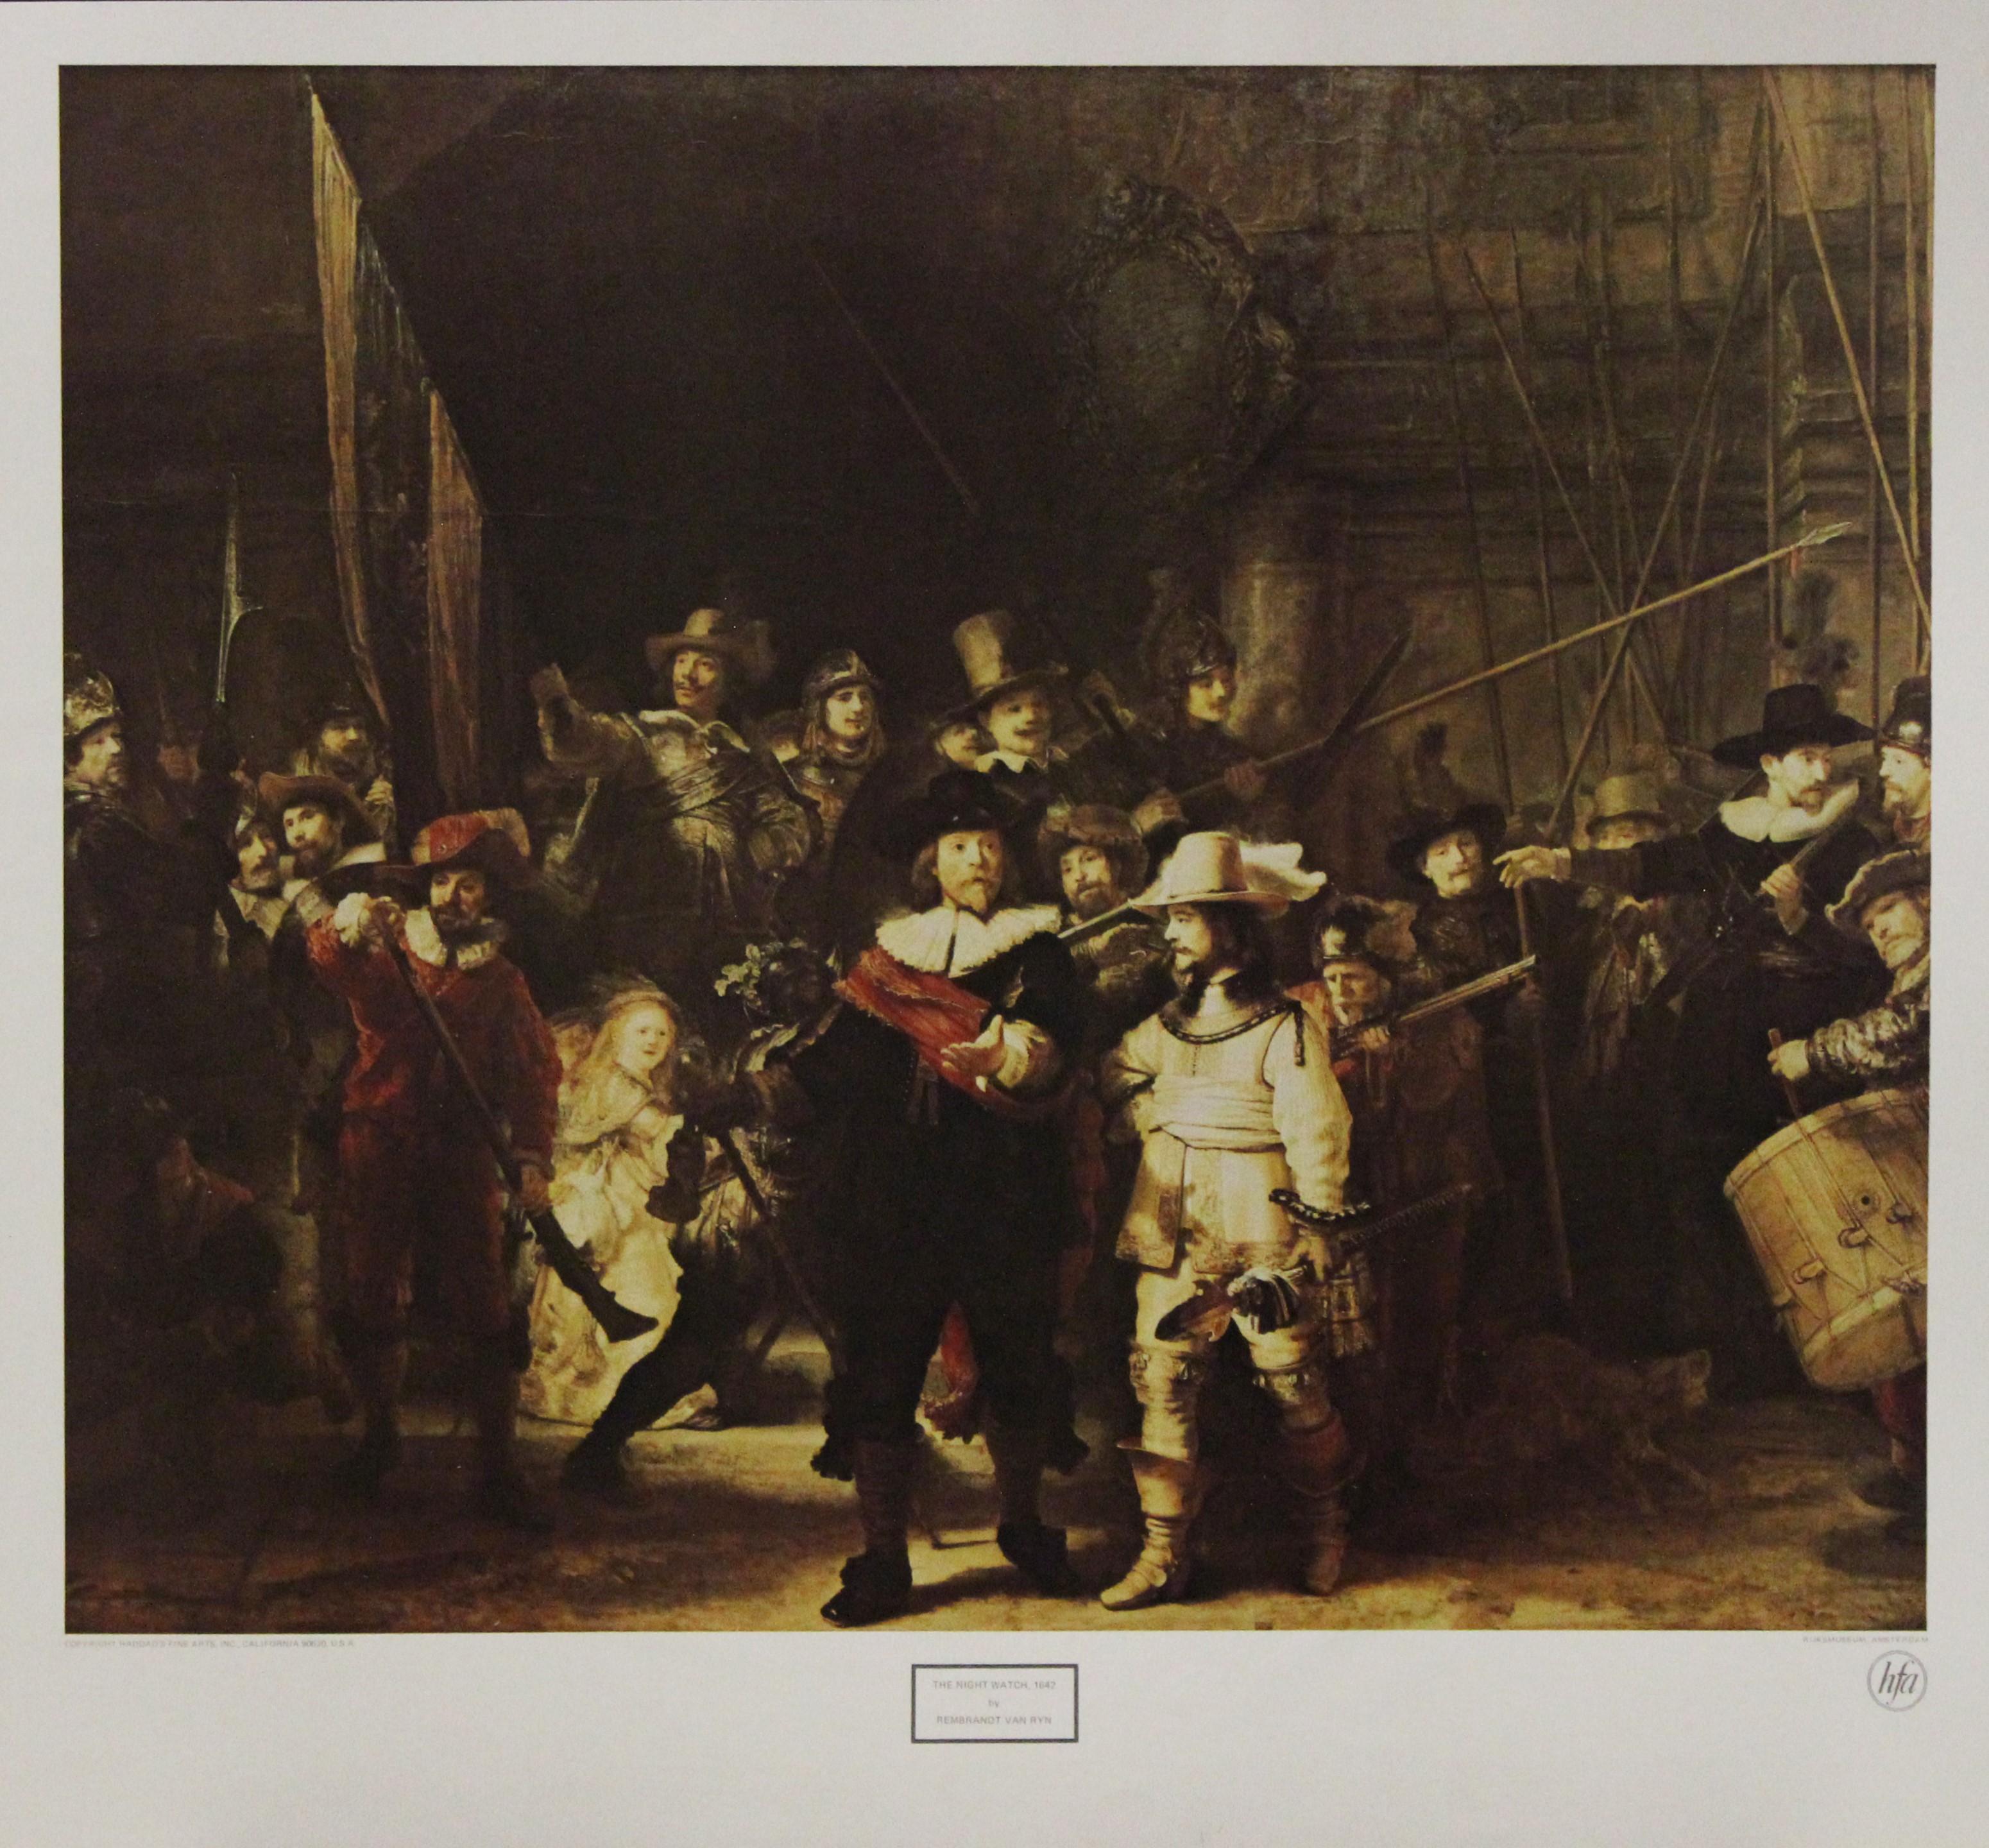 (After) Rembrandt van Rijn  Portrait Print - The Night Watch-Poster. Haddad's Fine Arts Inc. 